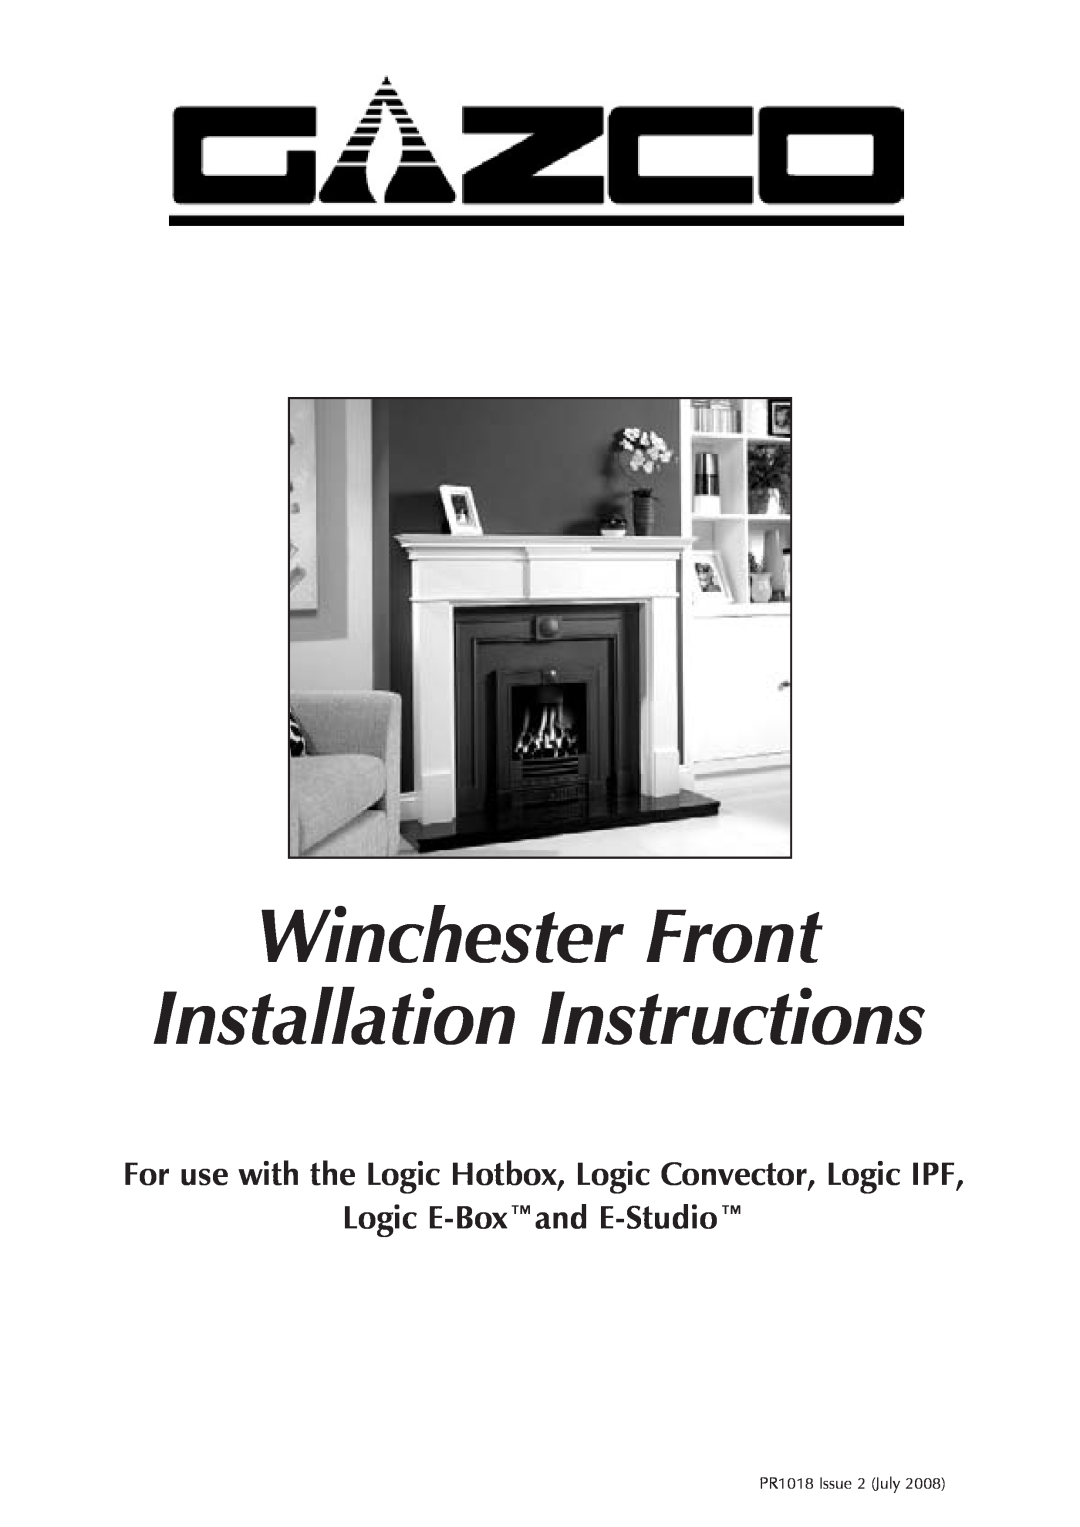 Stovax PR1018 installation instructions Winchester Front Installation Instructions, Logic E-Boxand E-Studio 